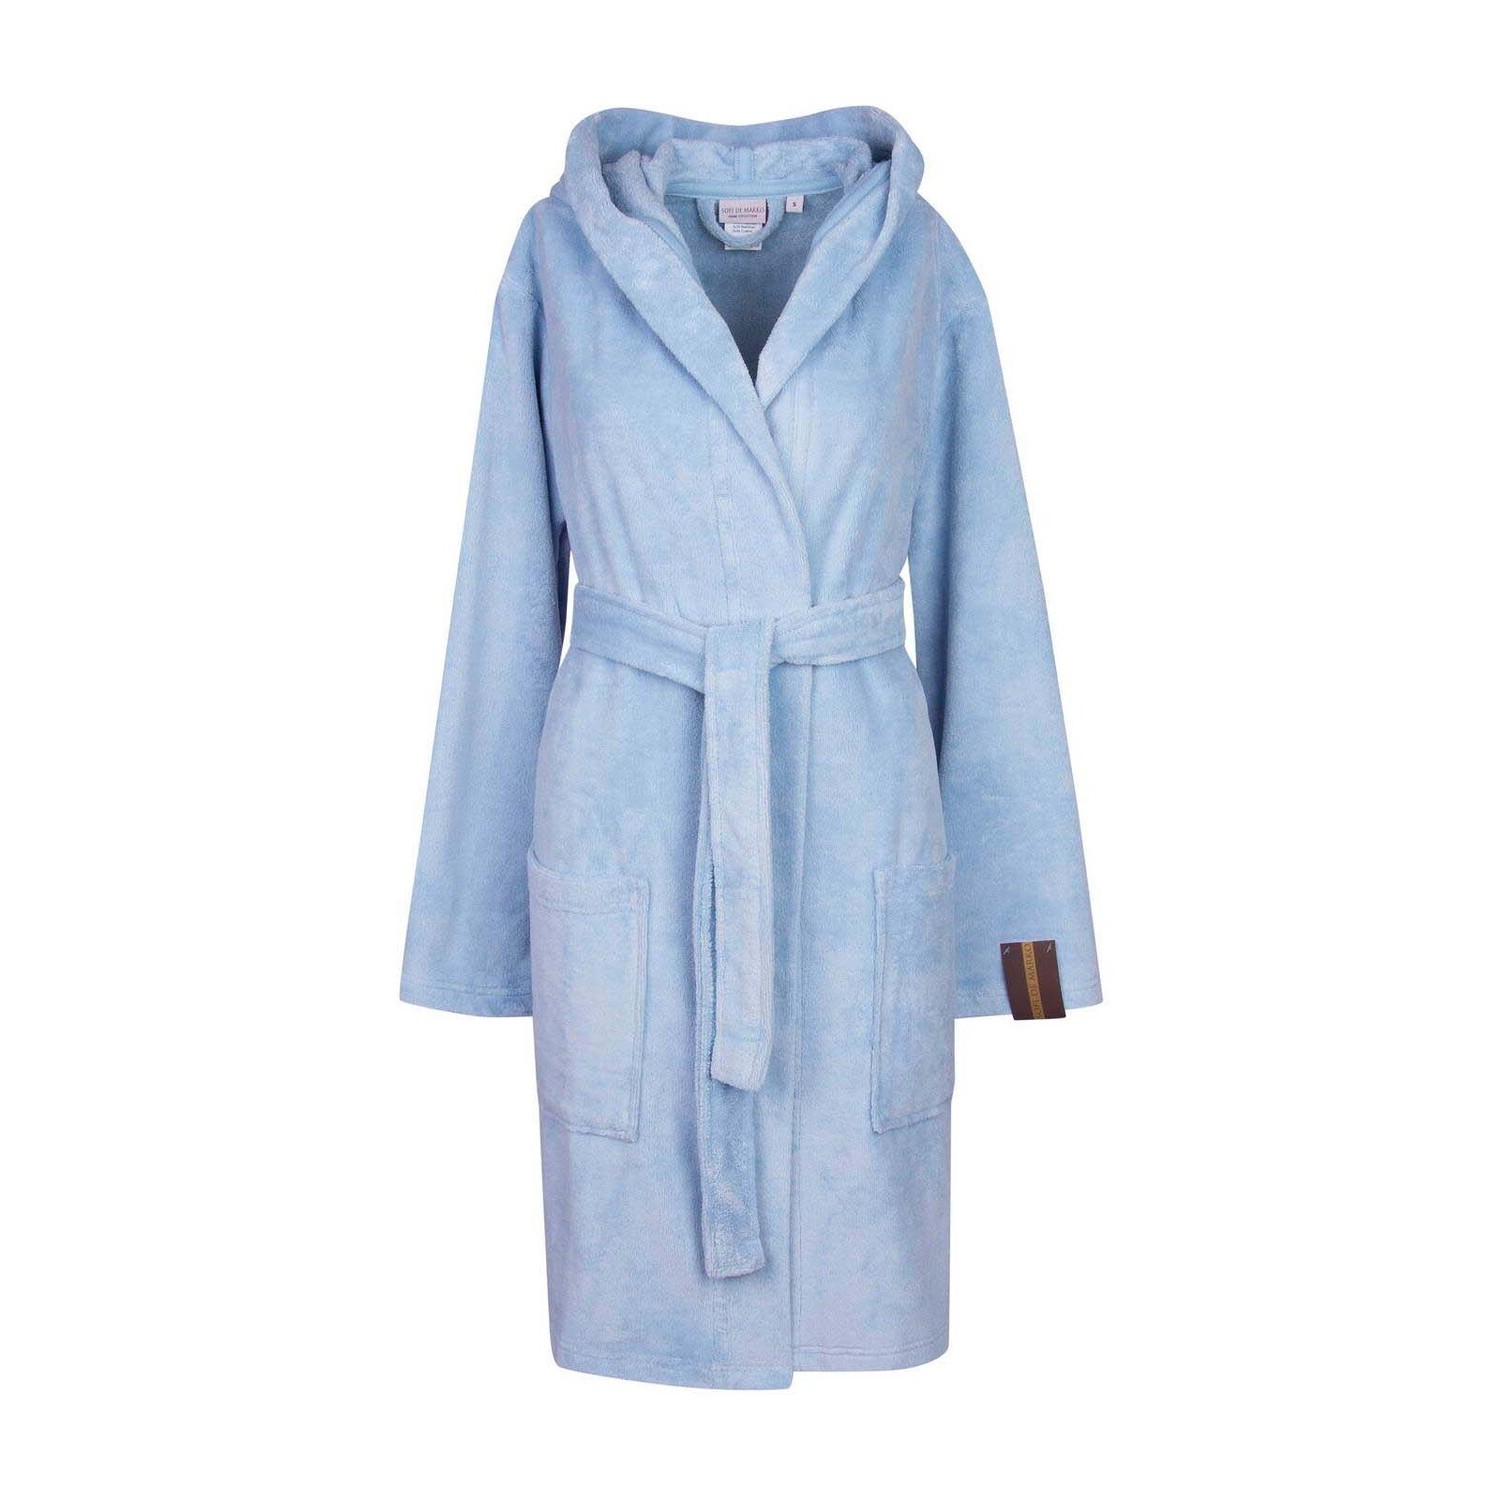 Банный халат Шанти цвет: голубой (XL)